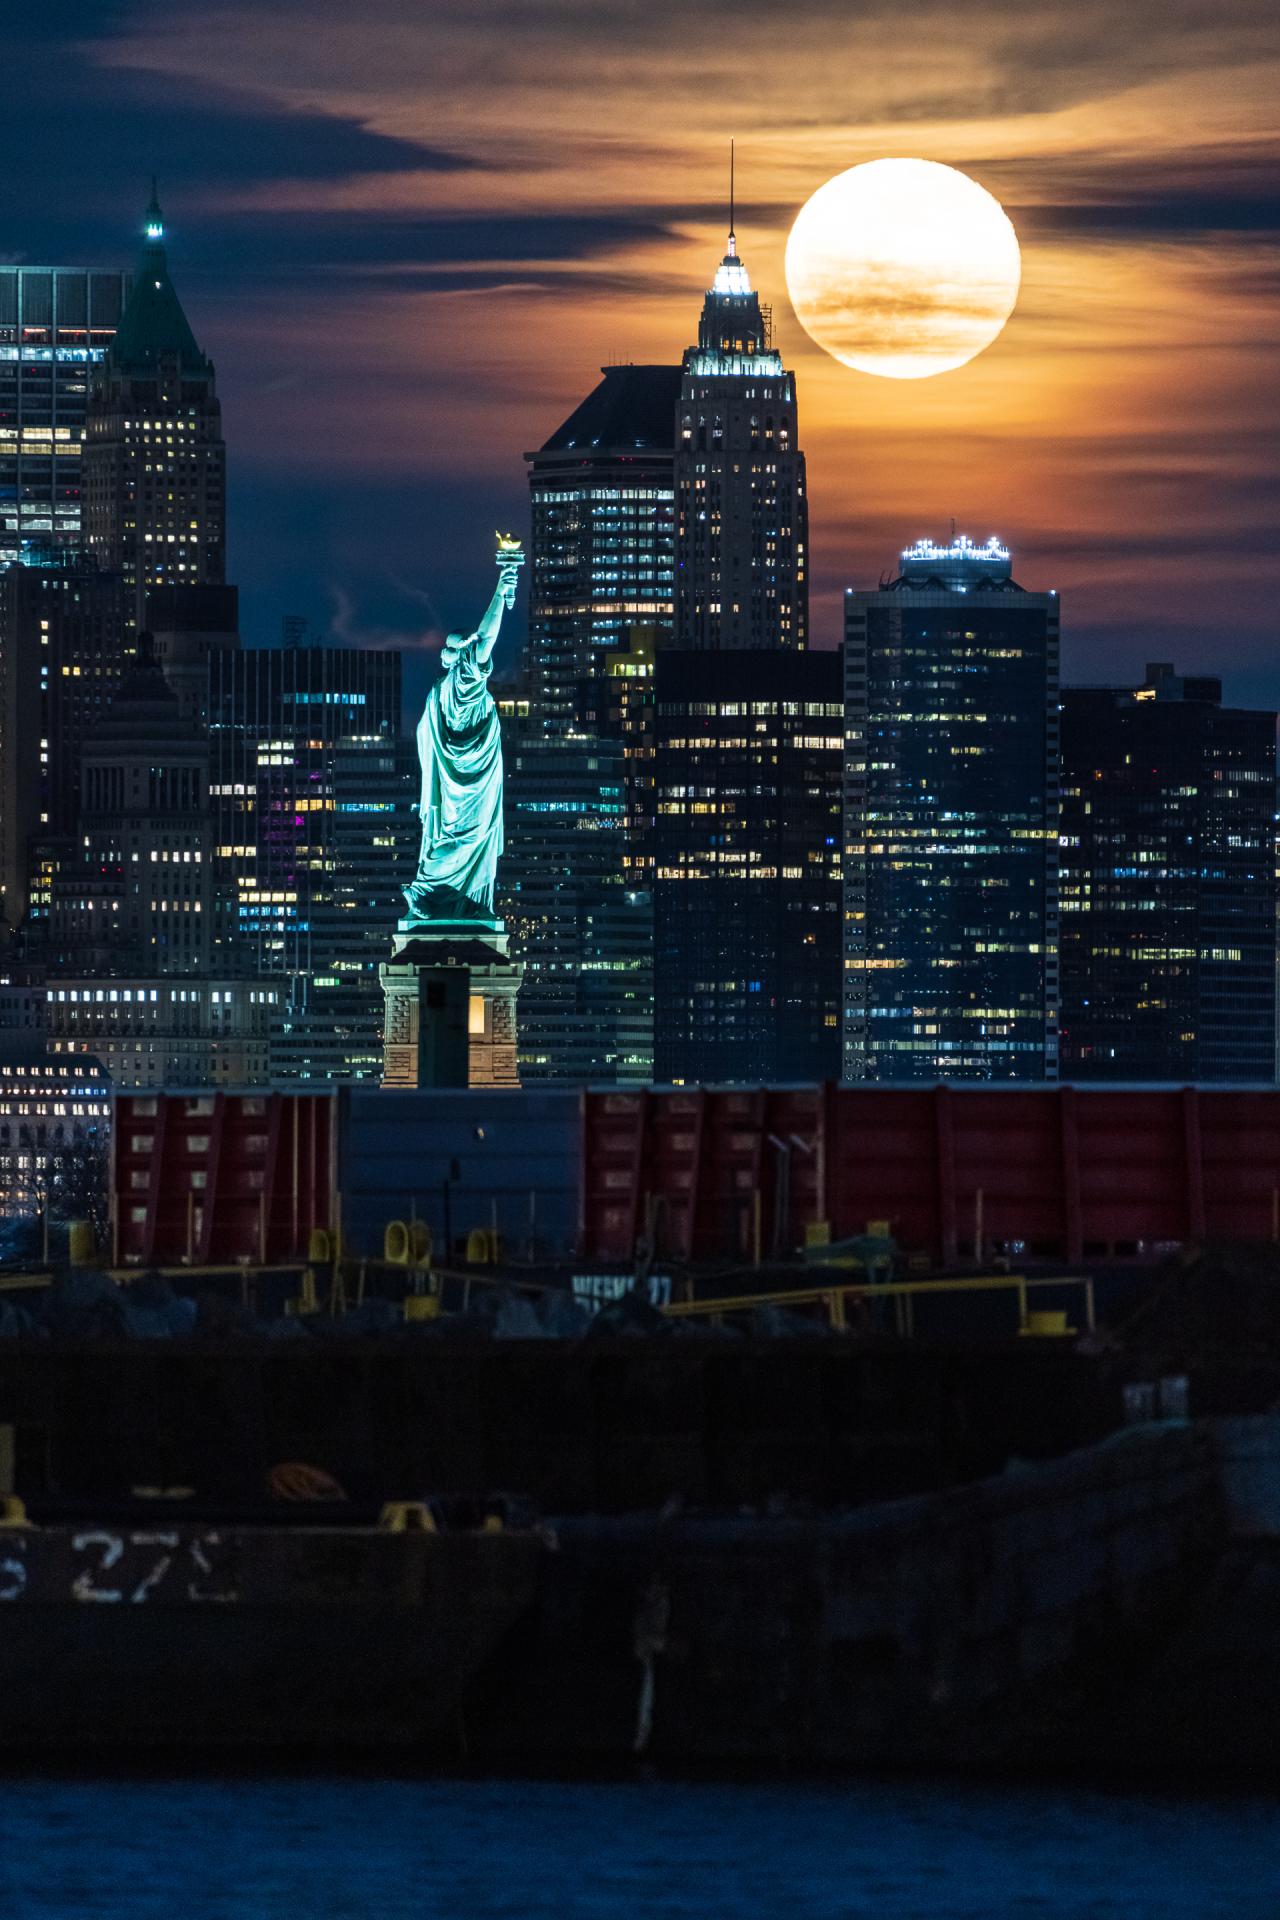 New York Photography Awards Winner - Moon rise with NYC Skyline